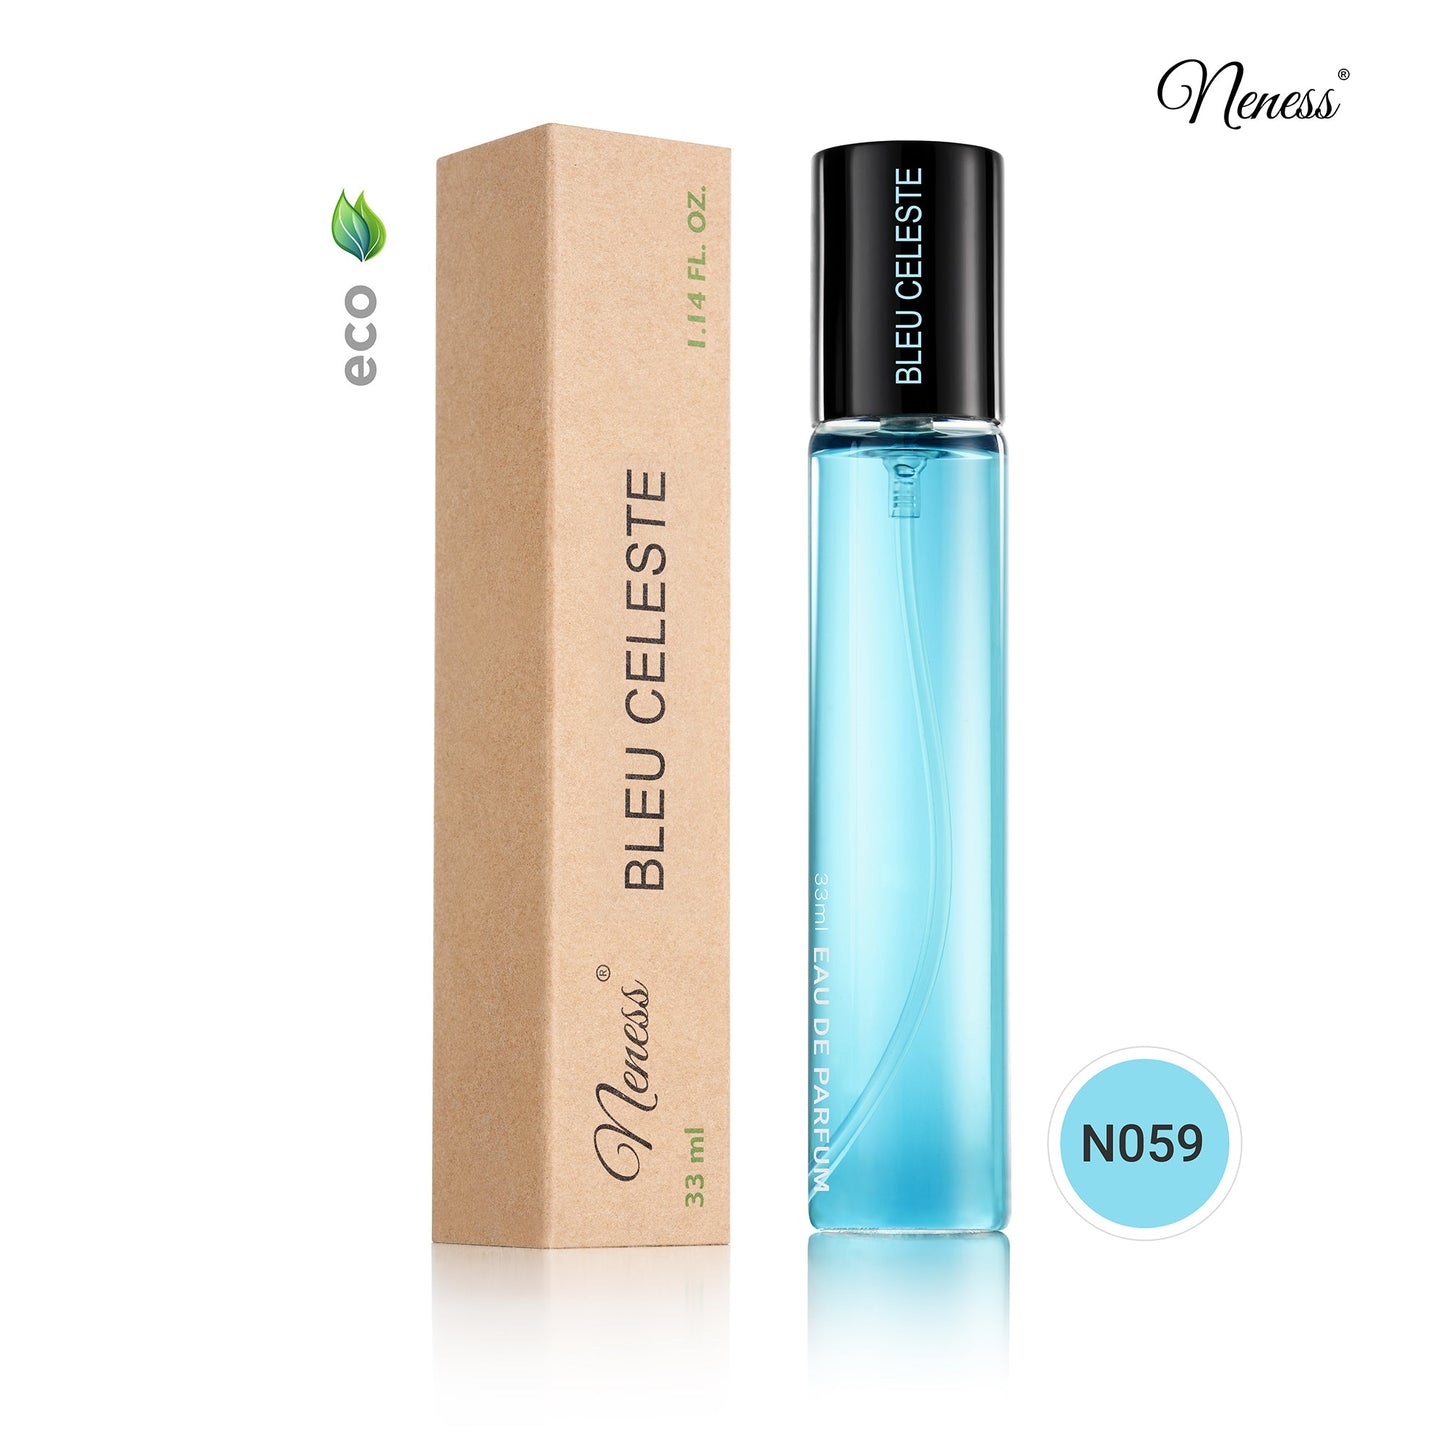 N059. Neness Bleu Celeste - 33 ml - Parfums voor mannen